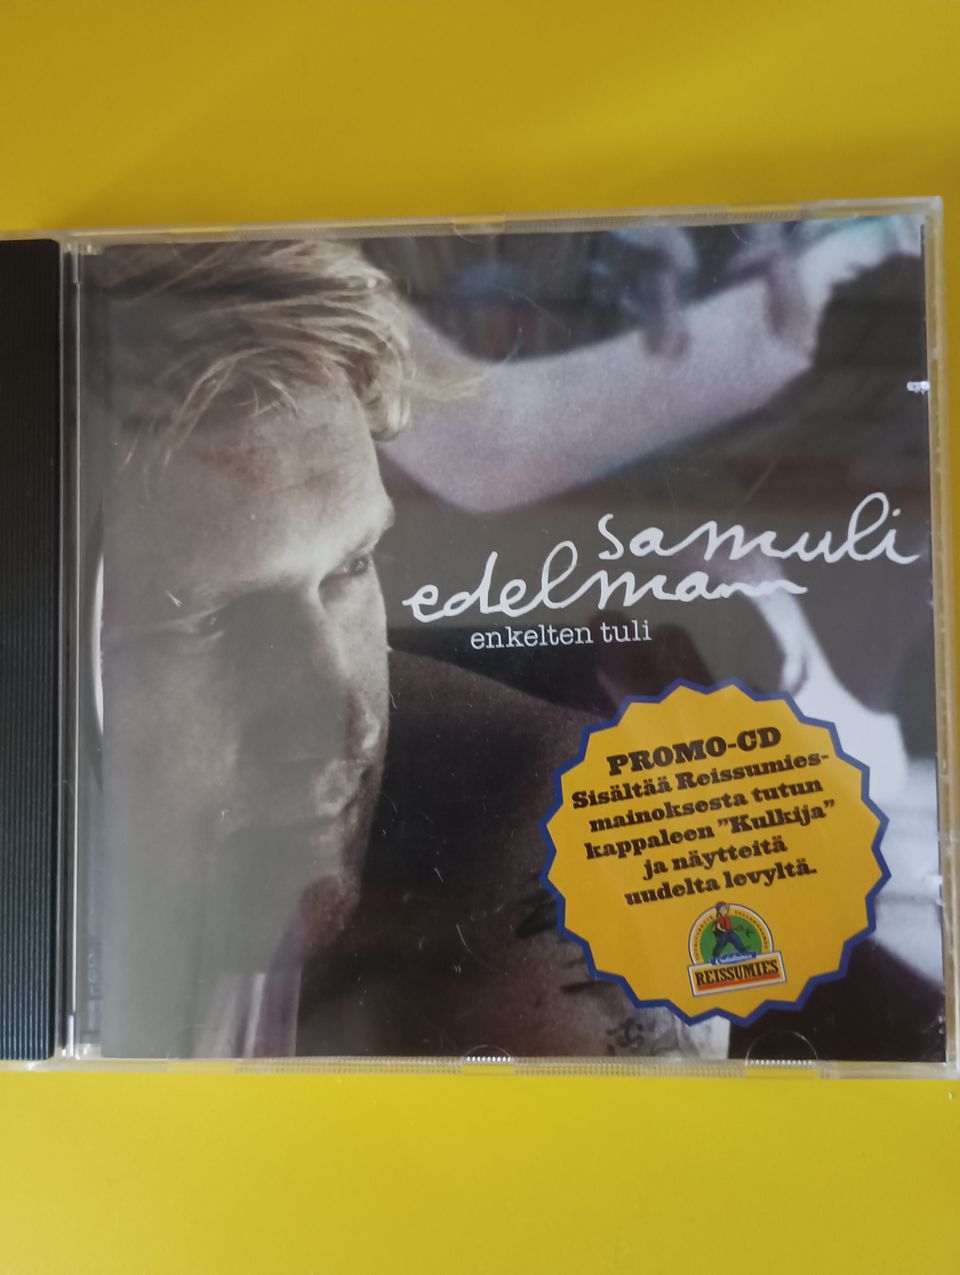 Samuli Edelmann - Enkelten tuli Reissumies promo-cd